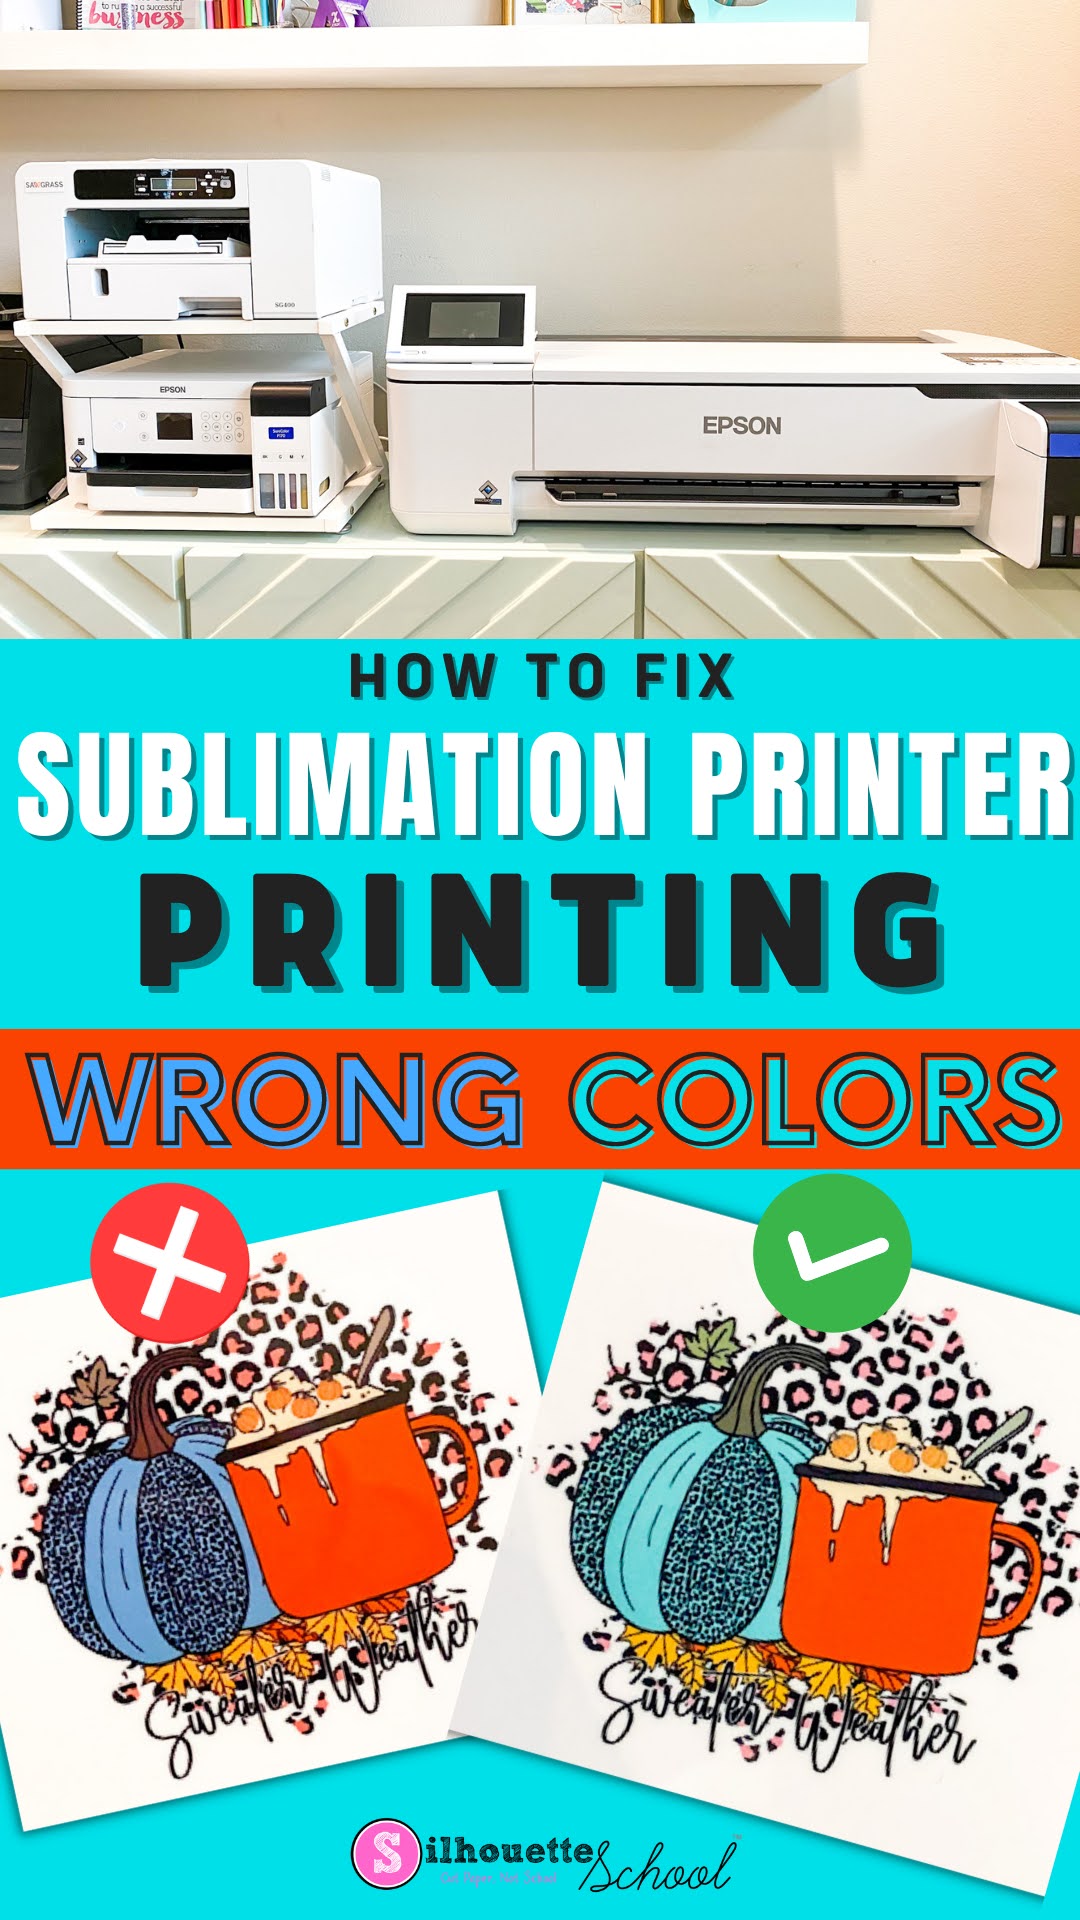 epson-surecolor-pro-f570-24-sublimation-printer-w-geo-knight-dk25sp